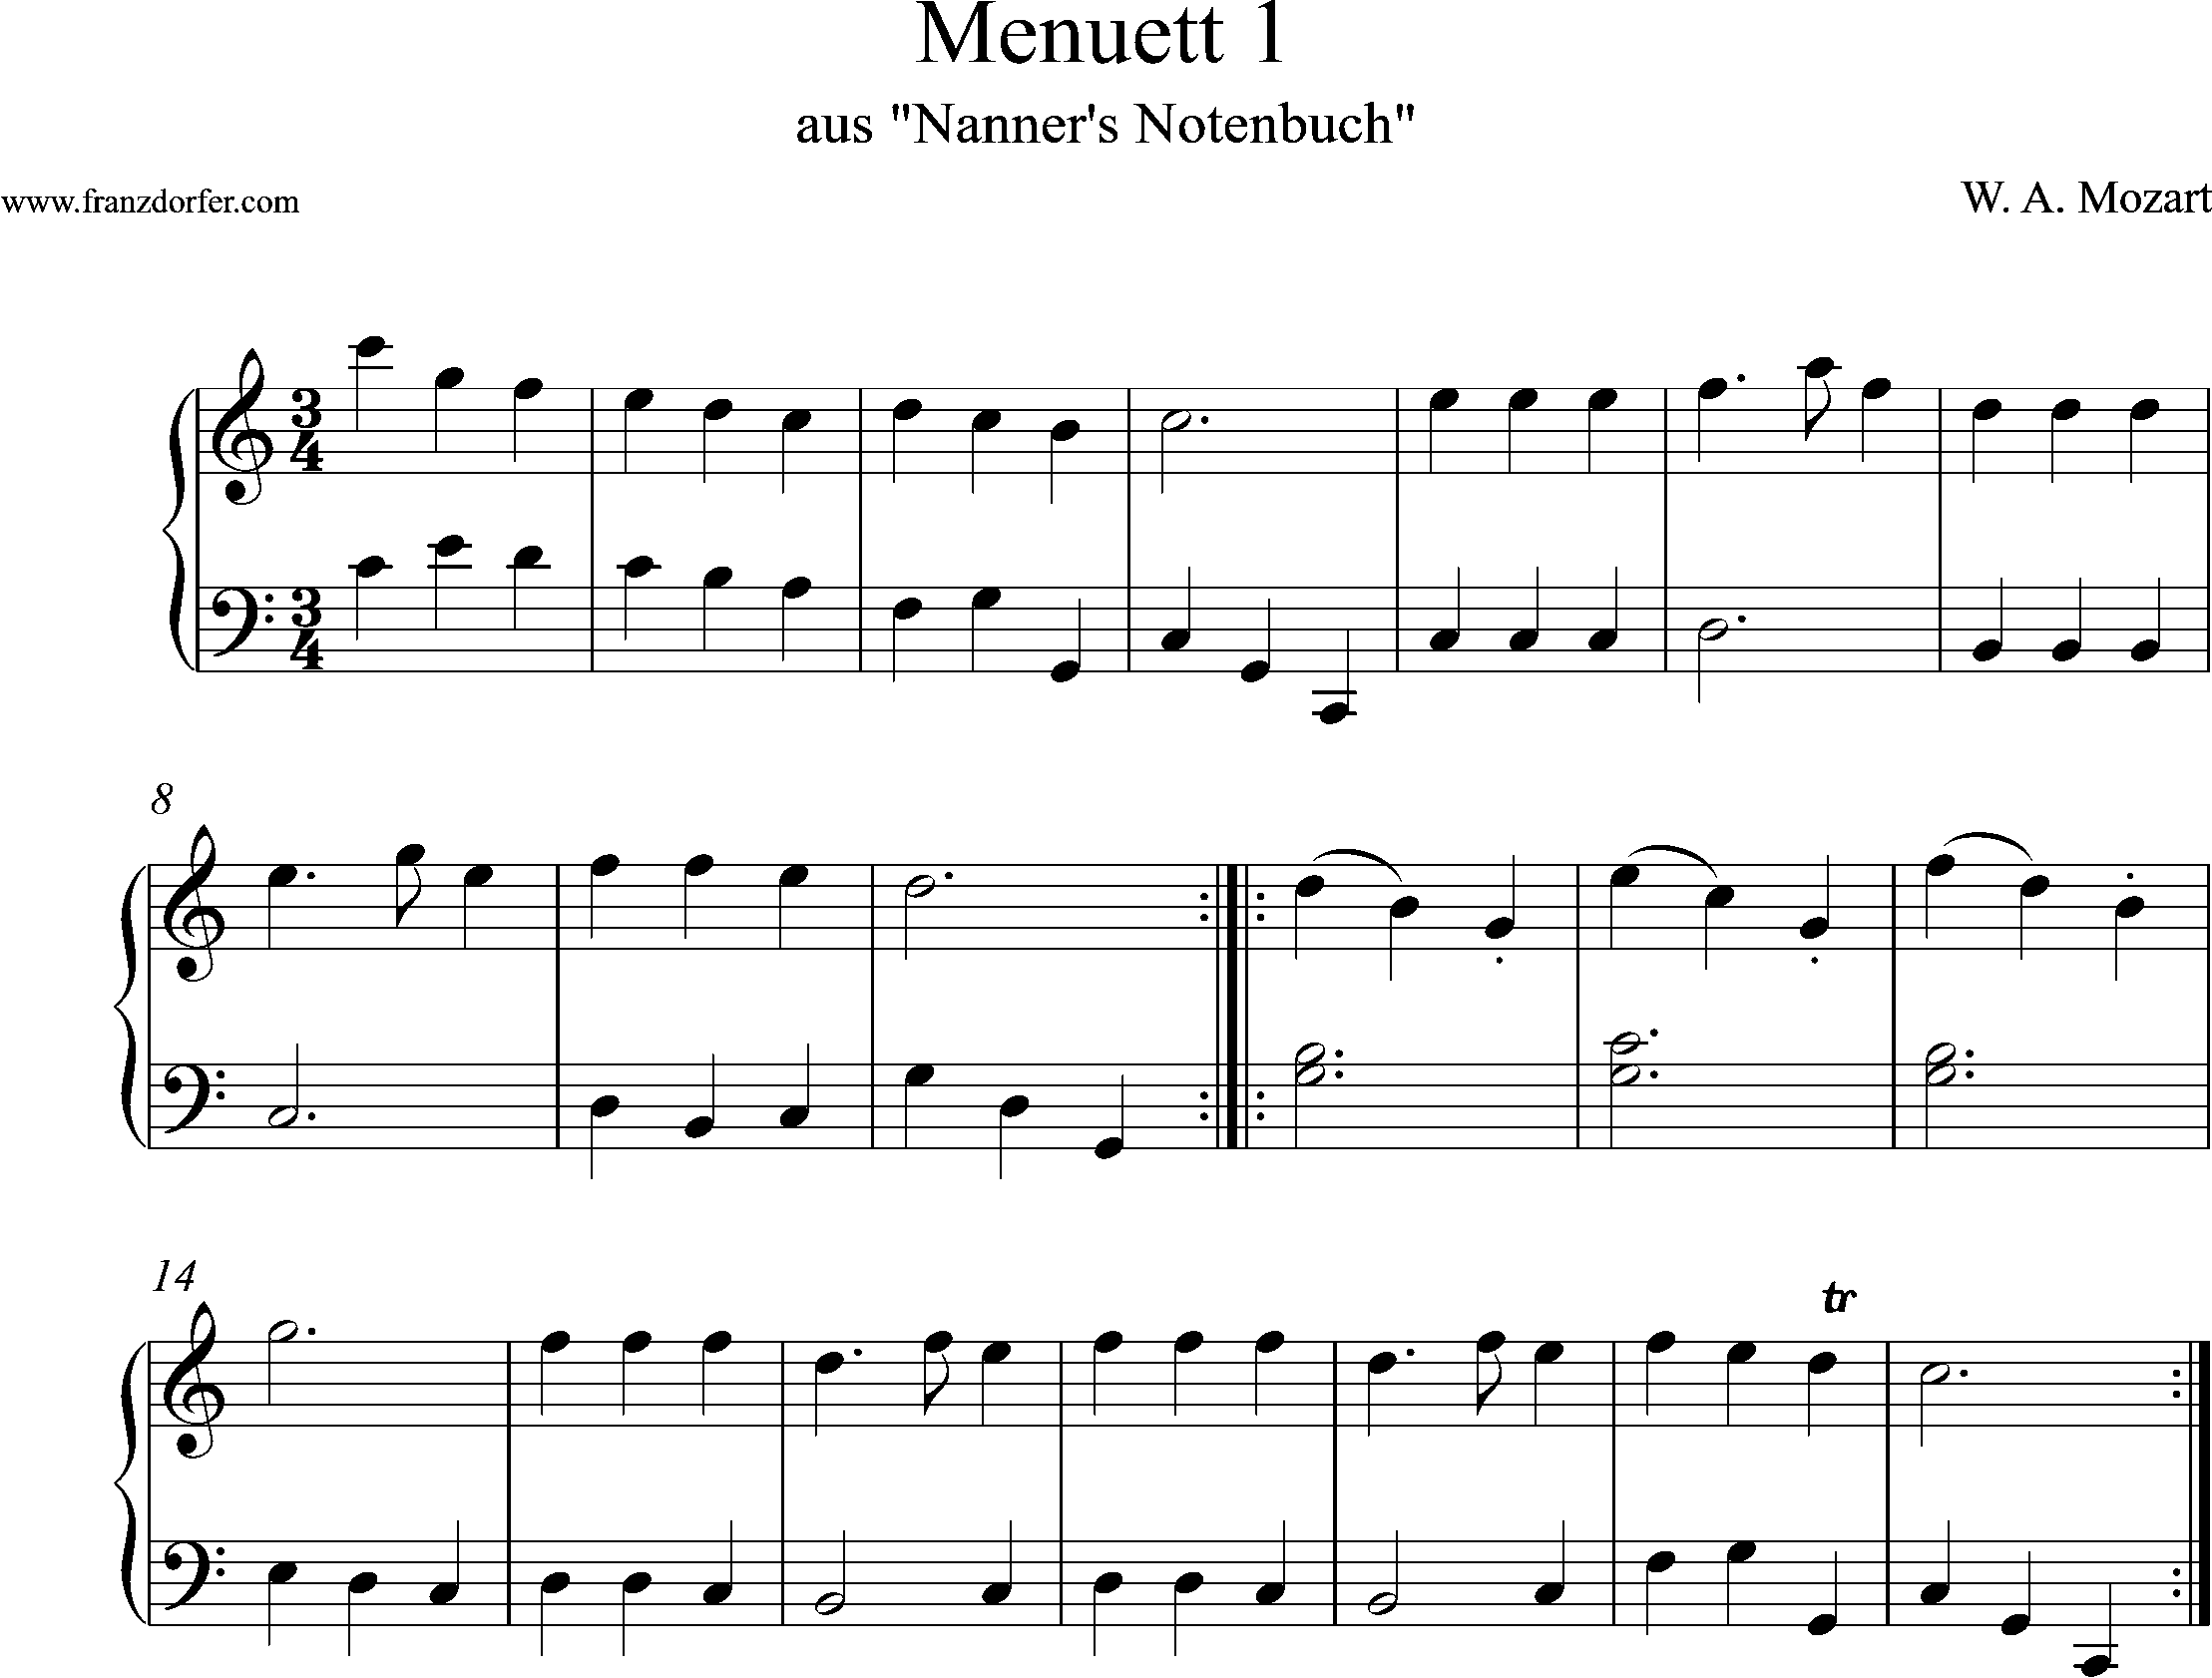 klaviernoten, MEnuett 1 , nannerls notenbuch